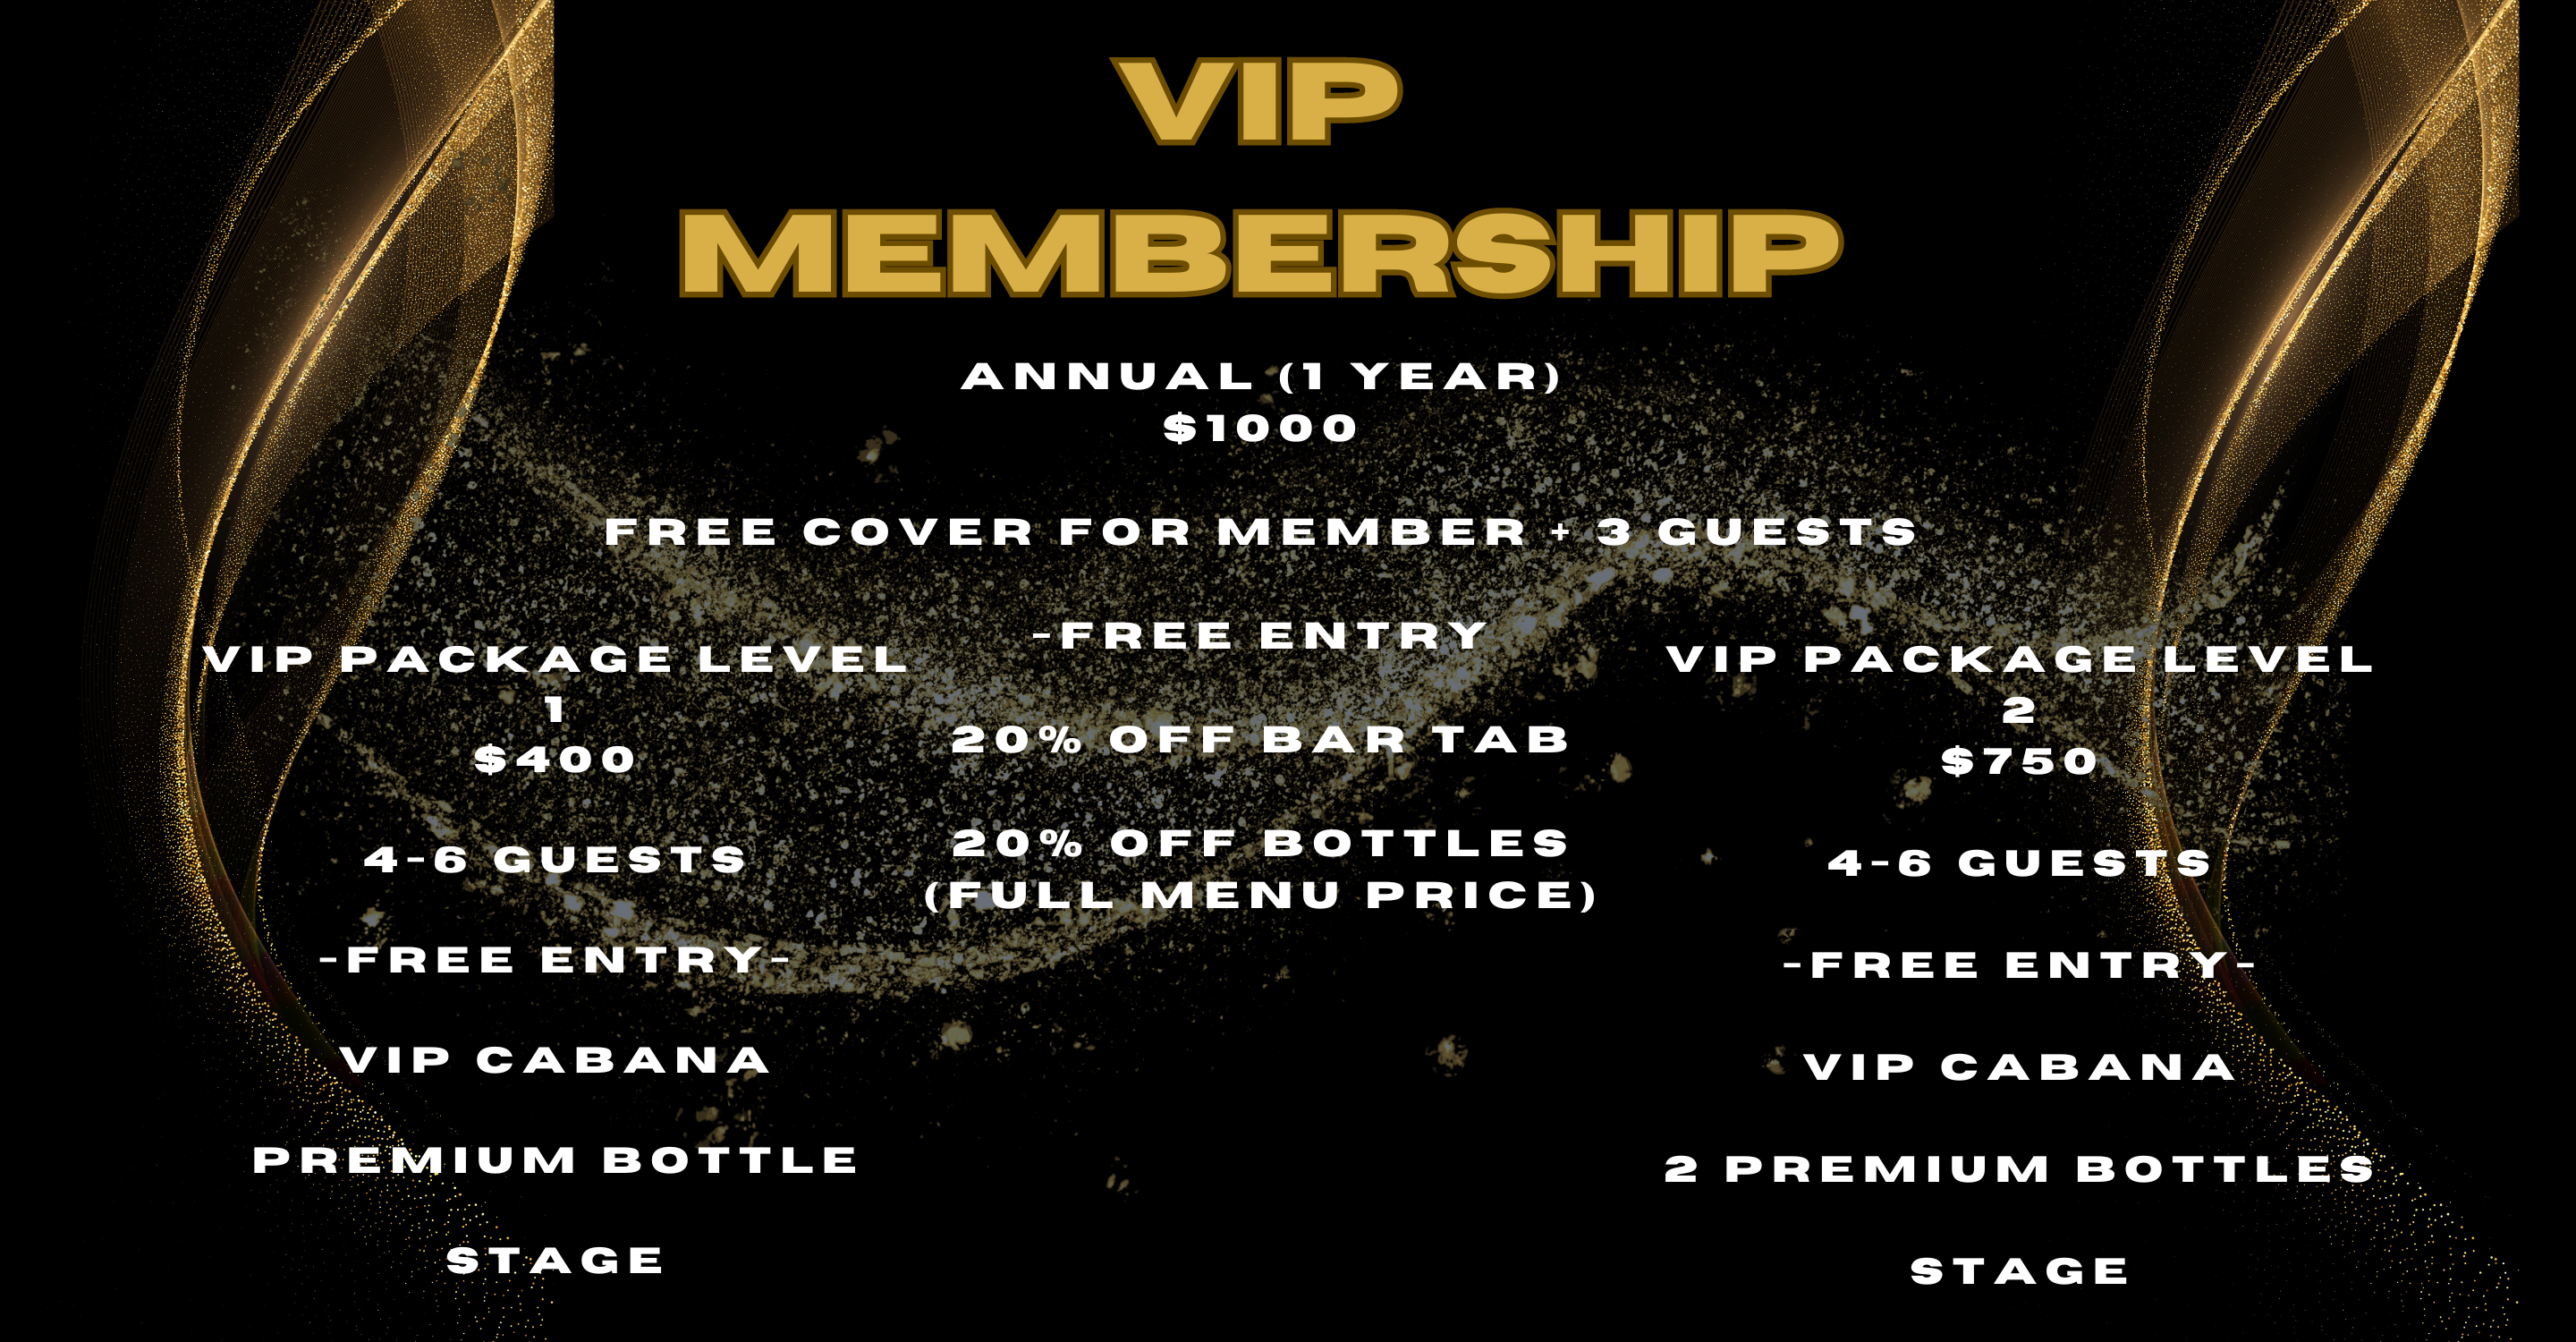 vip membership at strip clubs in dallas tx